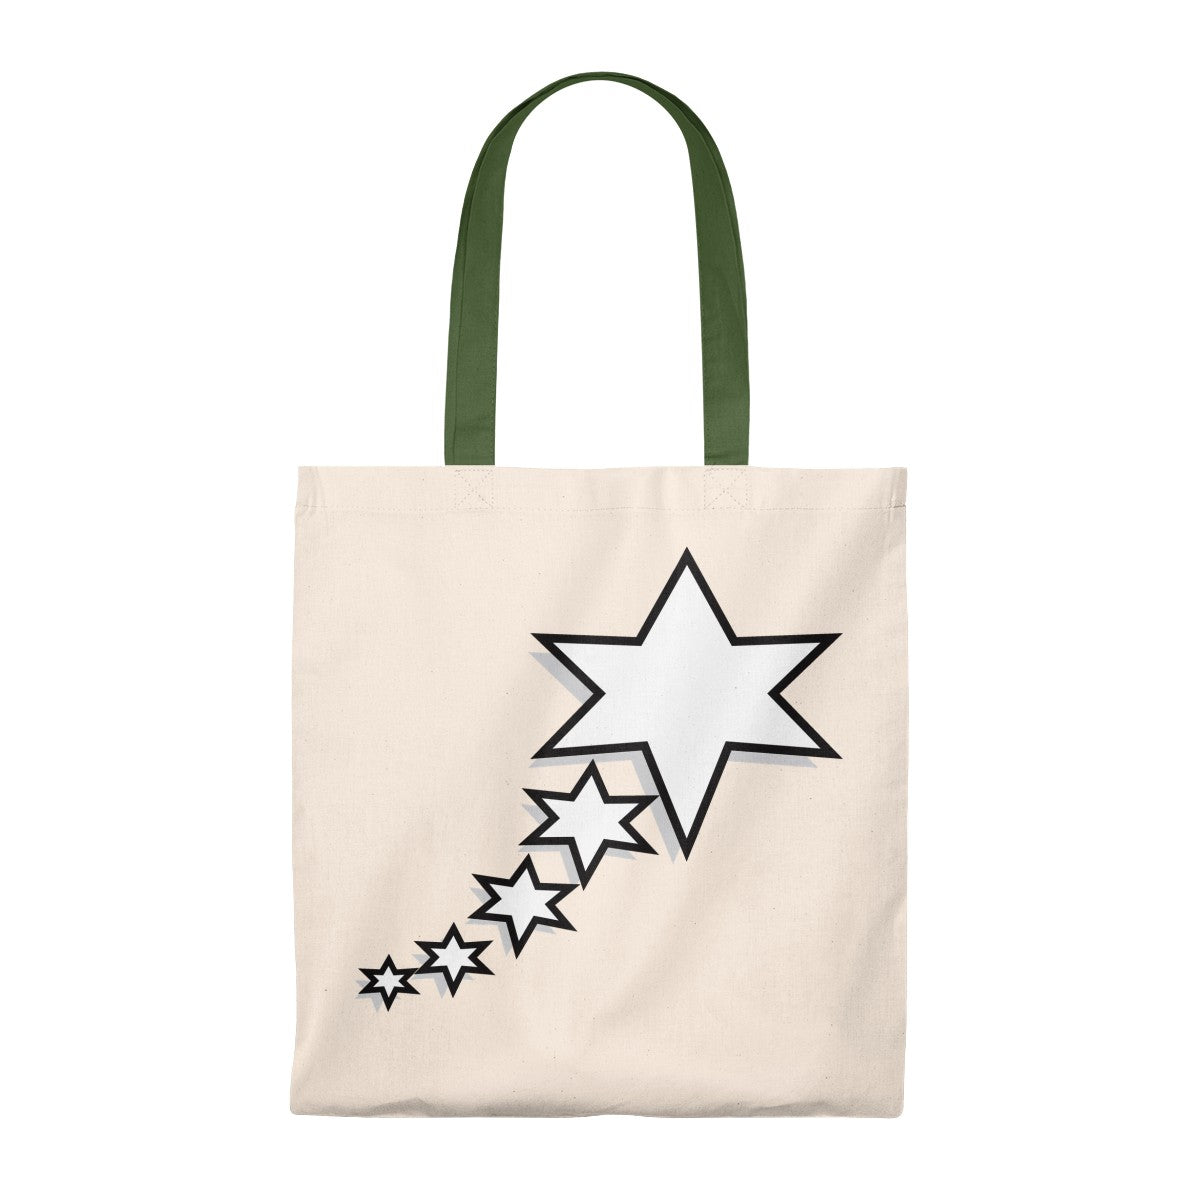 Tote Bag - Vintage - 6 Points 5 Stars (White)